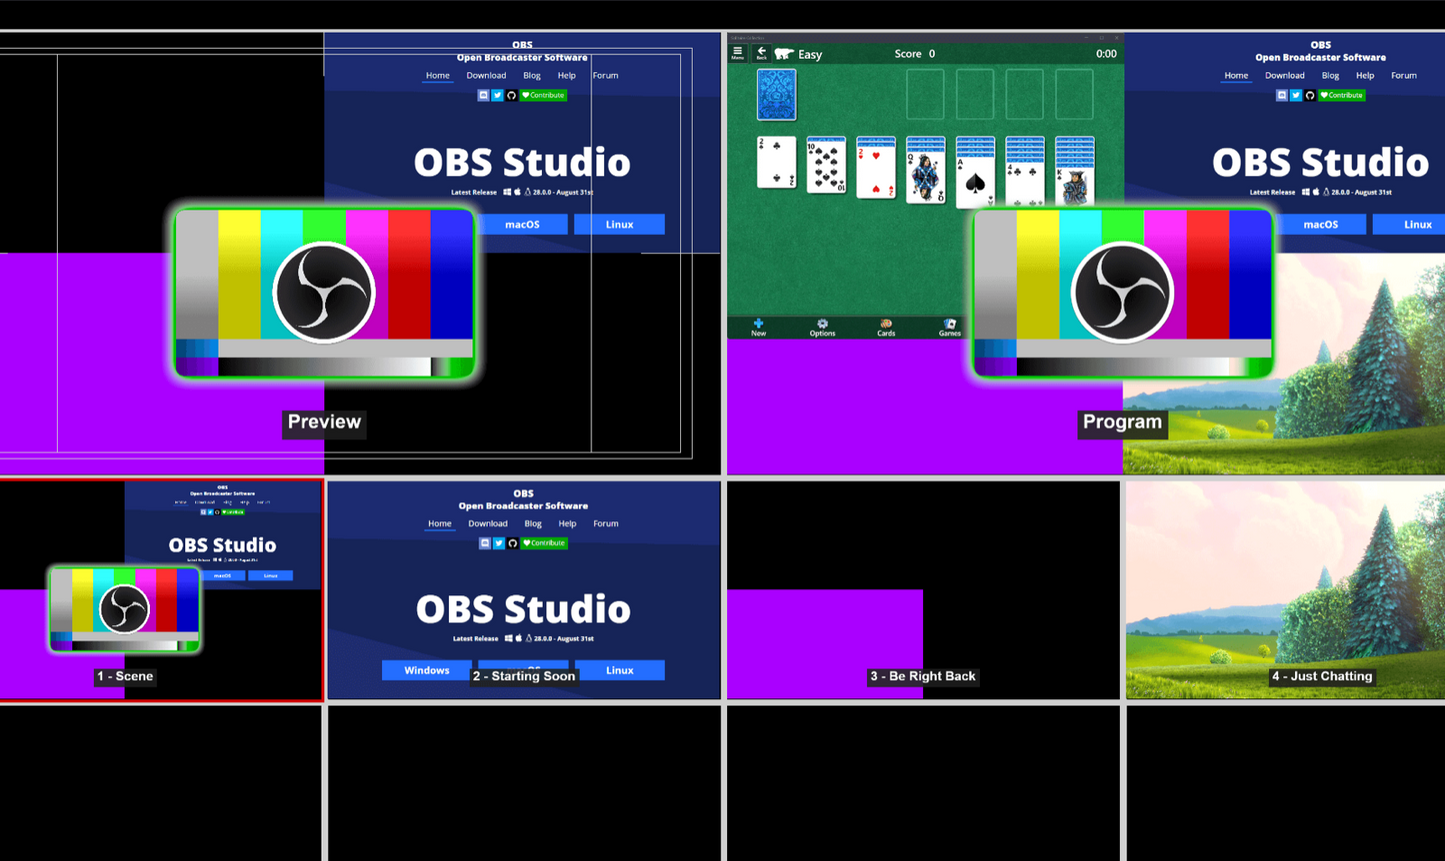 OBS Studio Video Recording | Live Streaming Screen Recording Software Windows CD